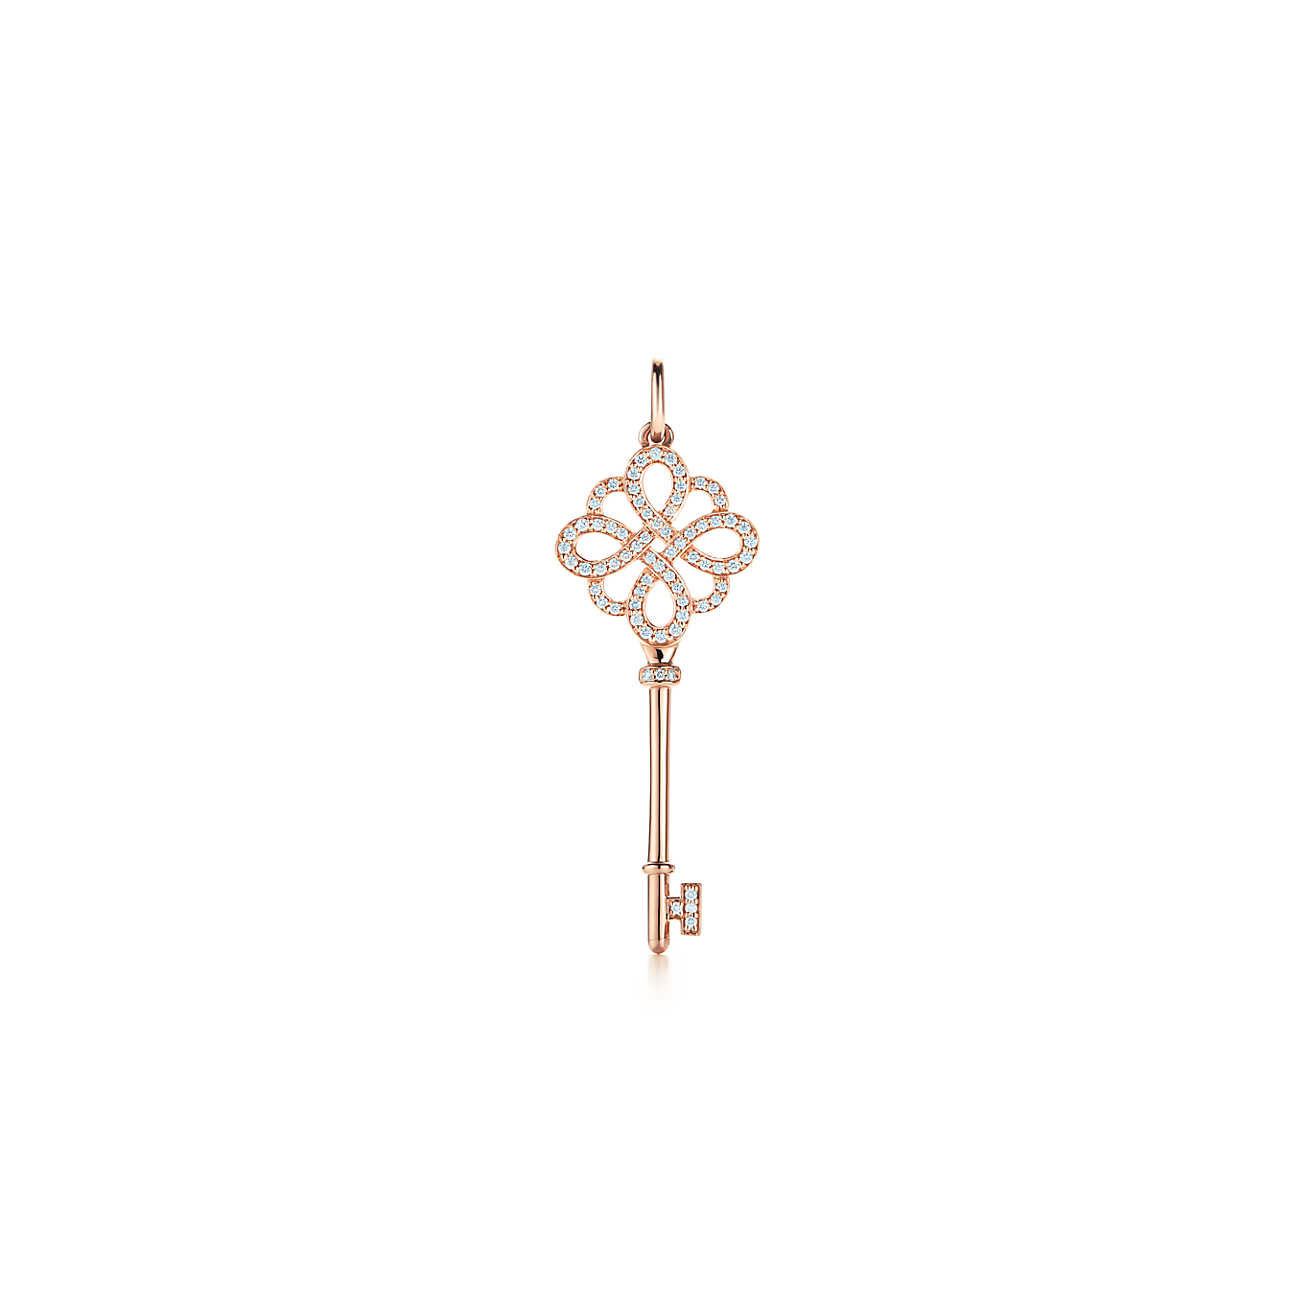 Tiffany Keys 18K 玫瑰金镶钻蝴蝶结形钥匙